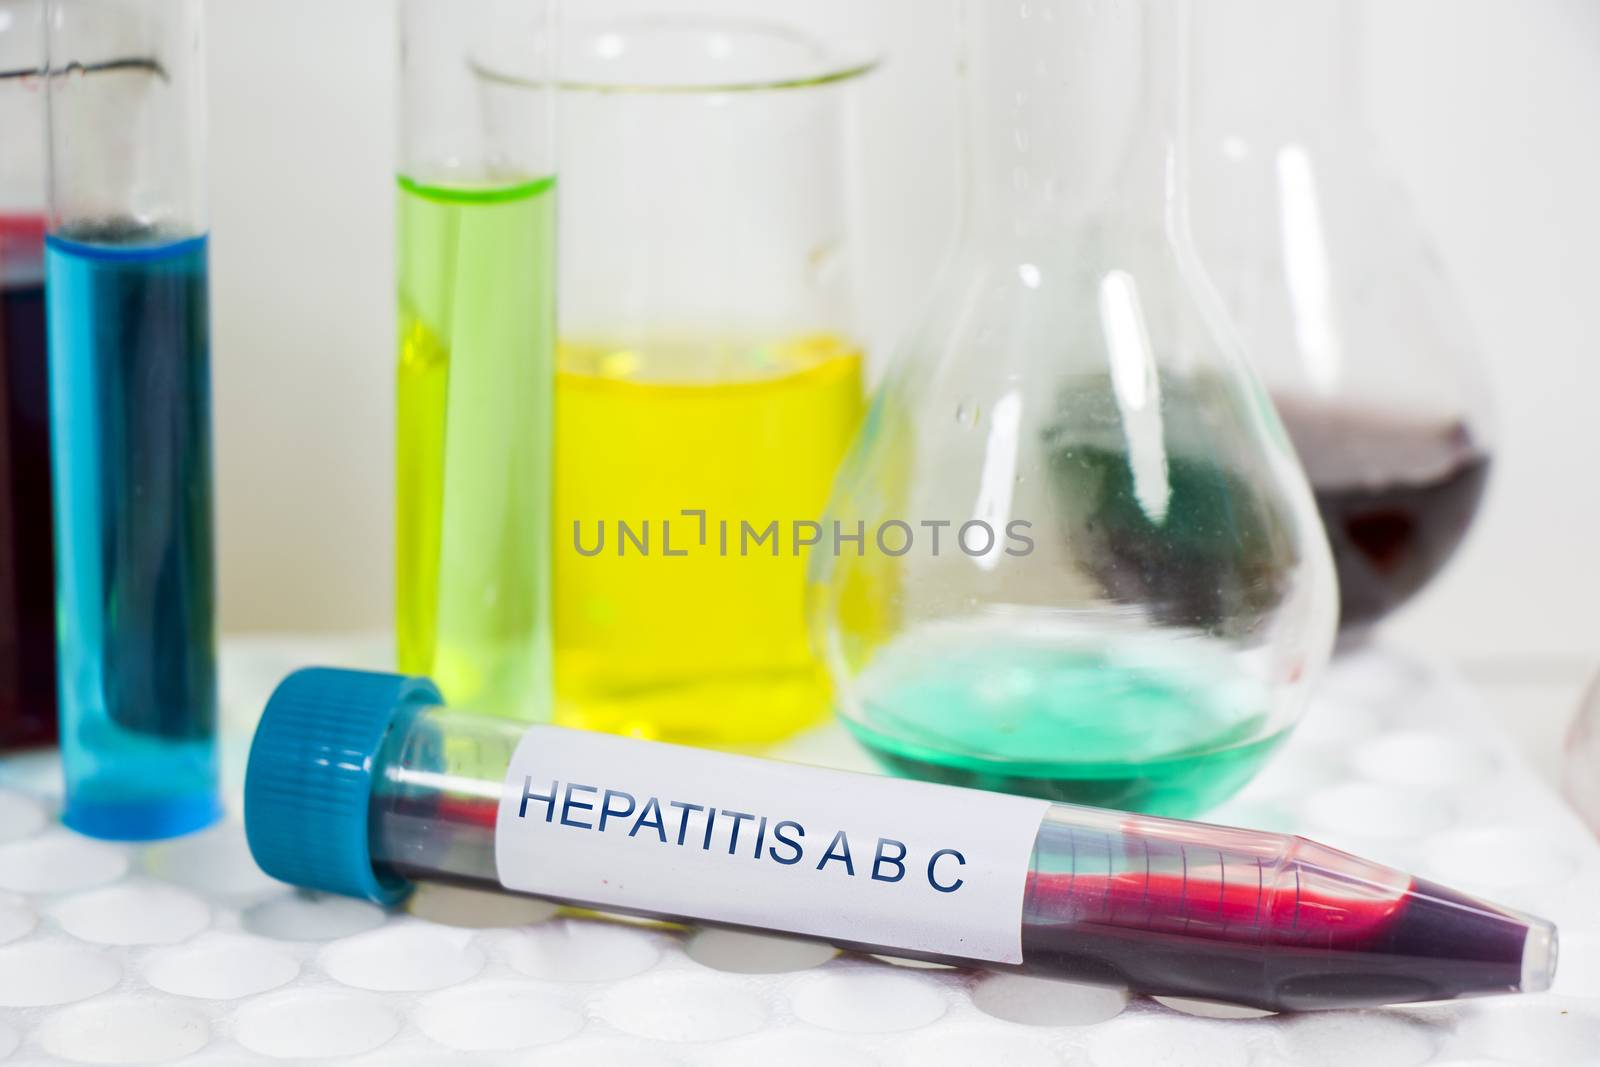 Hepatitis blood test tube samples by Taidundua